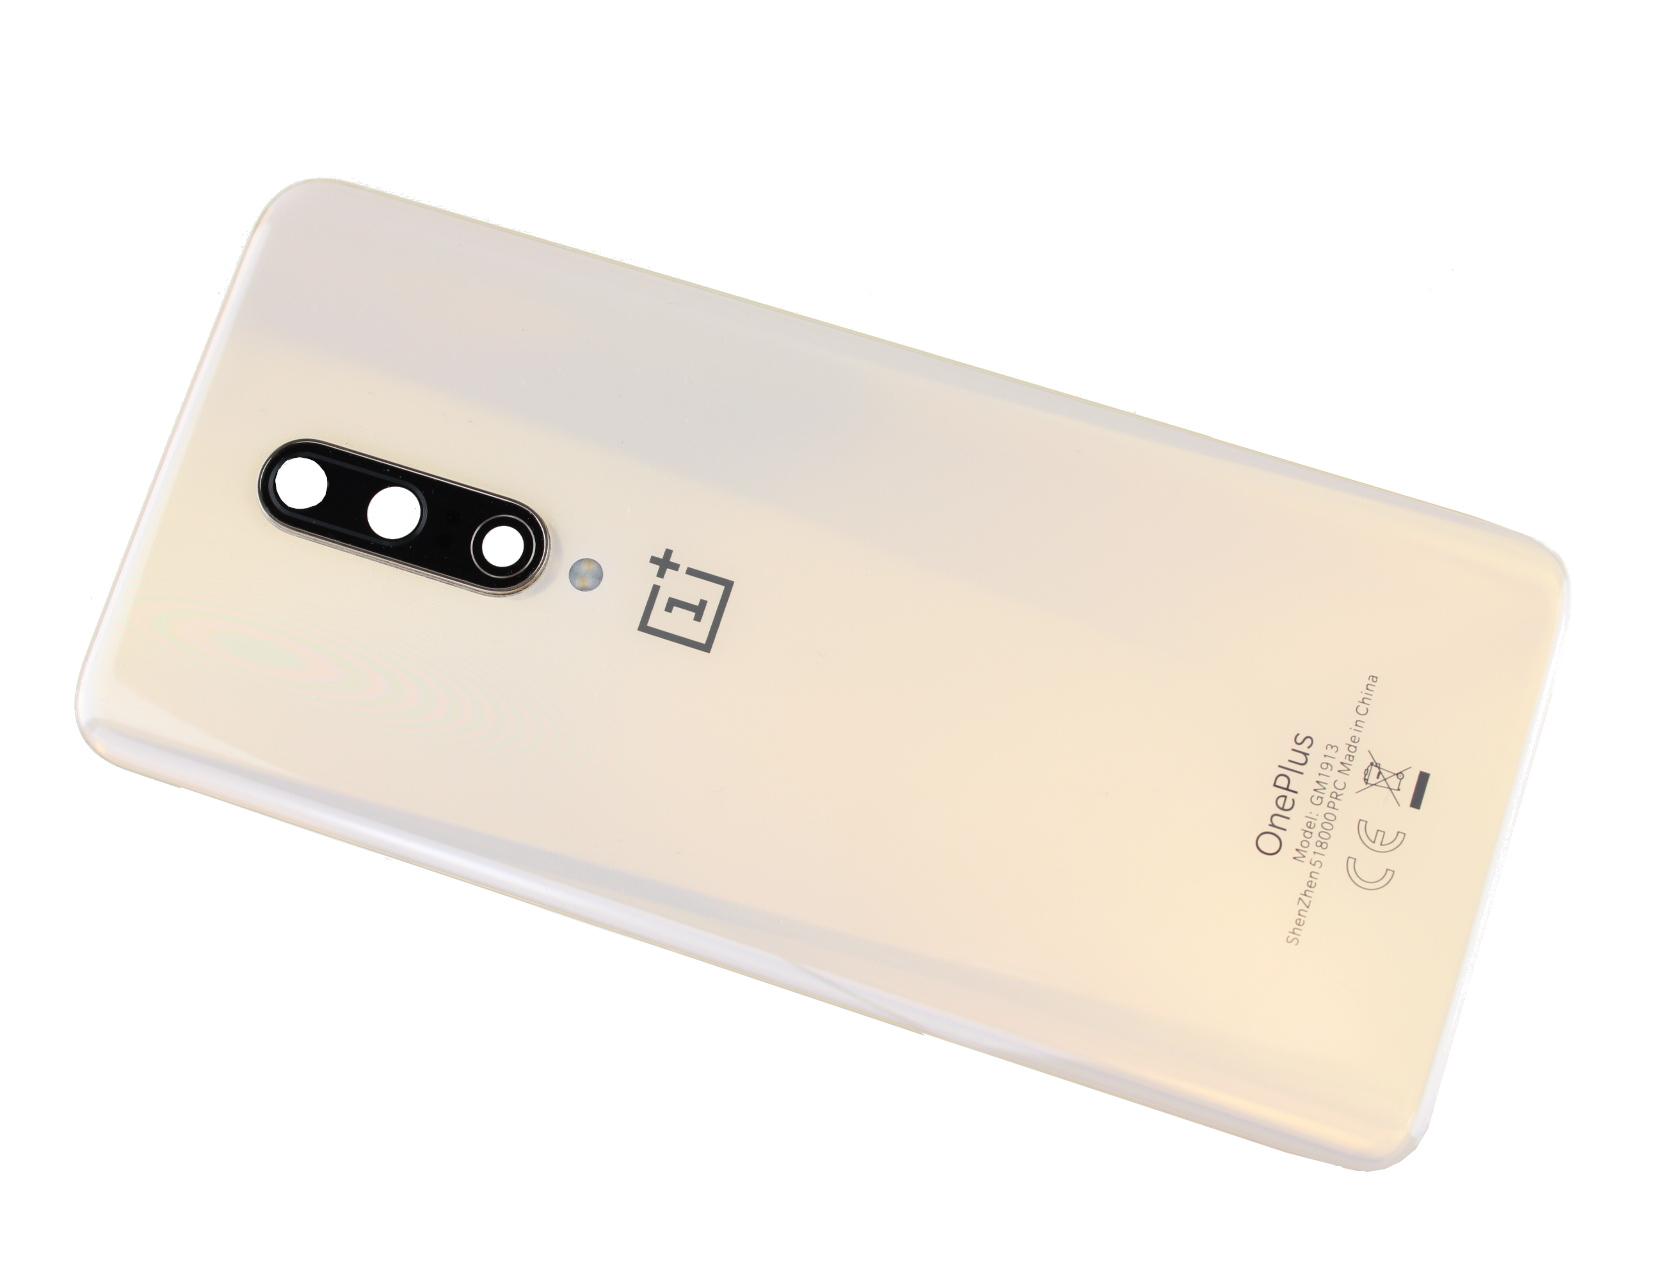 Originál kryt baterie OnePlus 7 Pro GM1913 perleťový - demontovaný díl